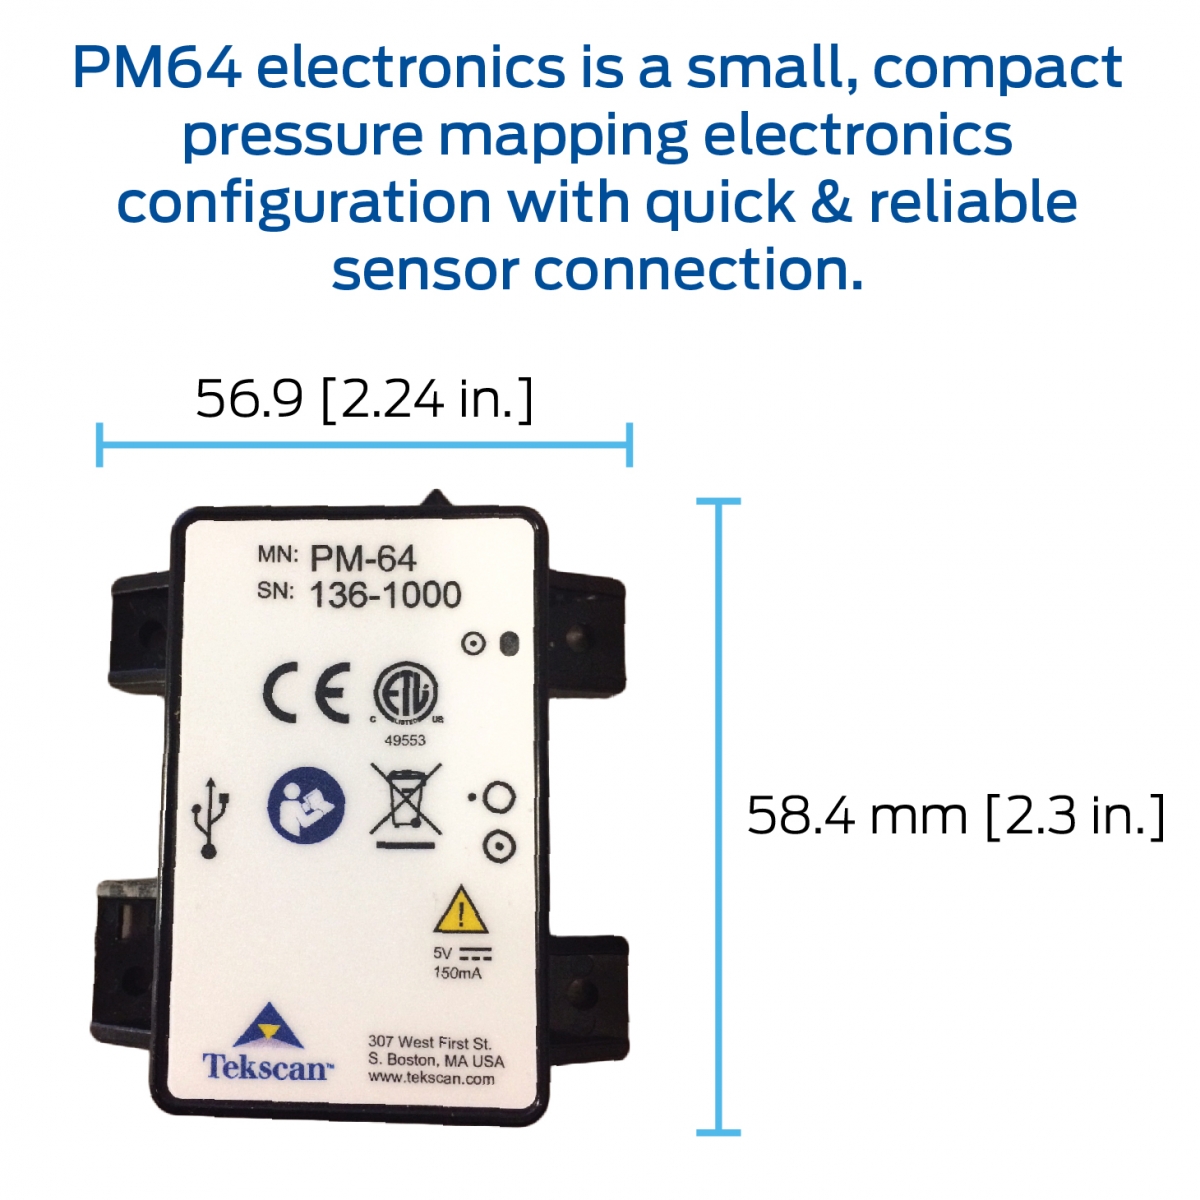 pm64 electronics specs